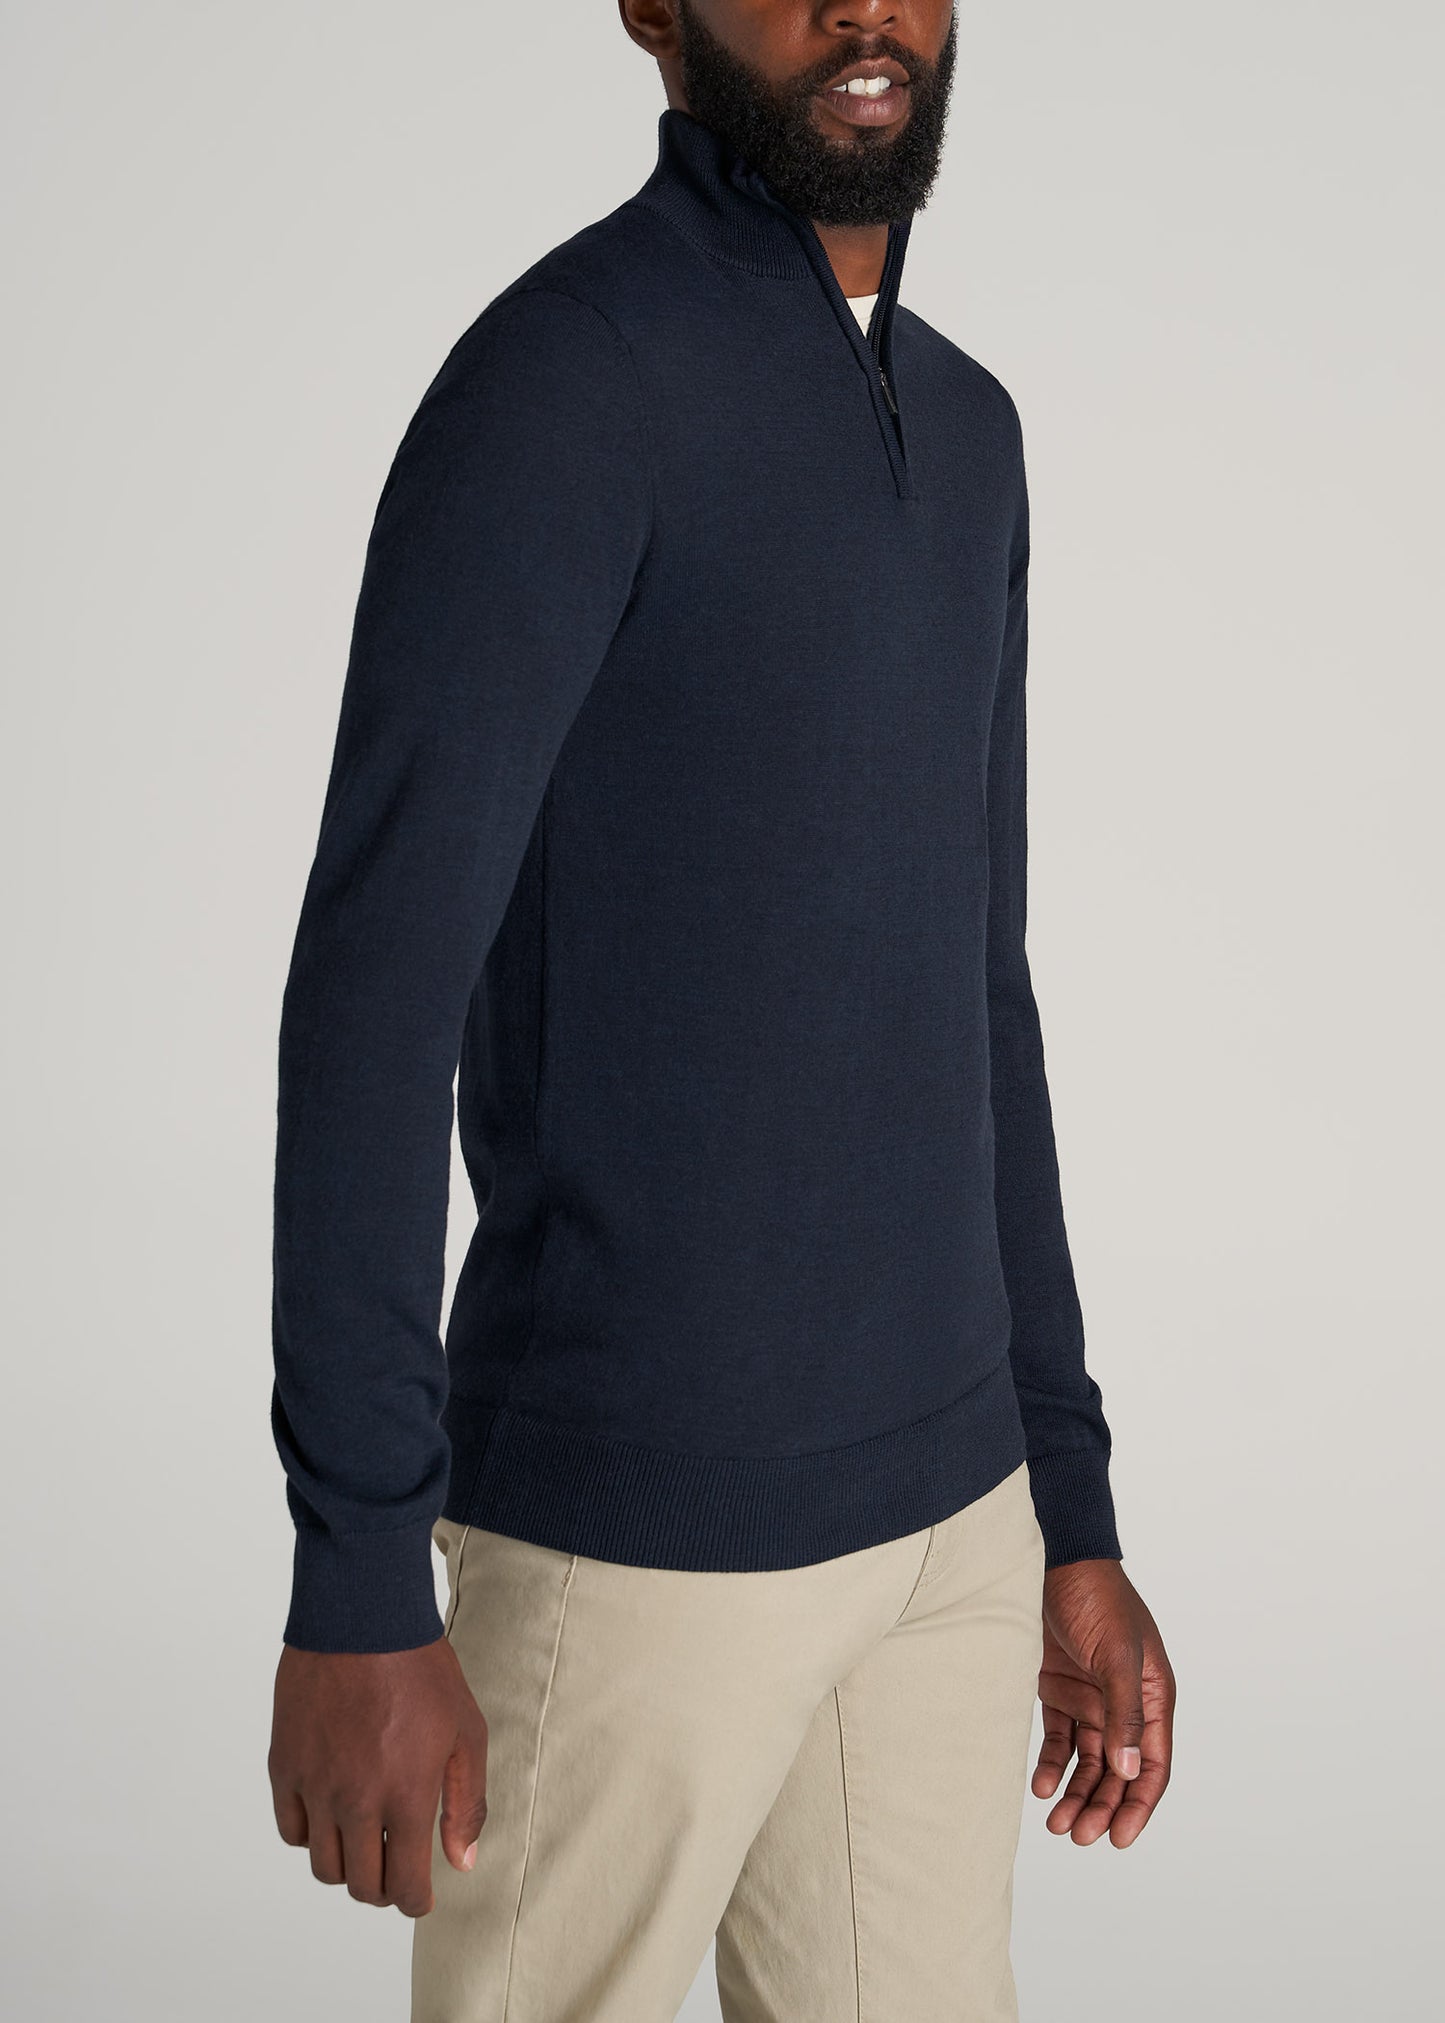       American-Tall-Men-Everyday-Quarter-Zip-Sweater-Patriot-Blue-side